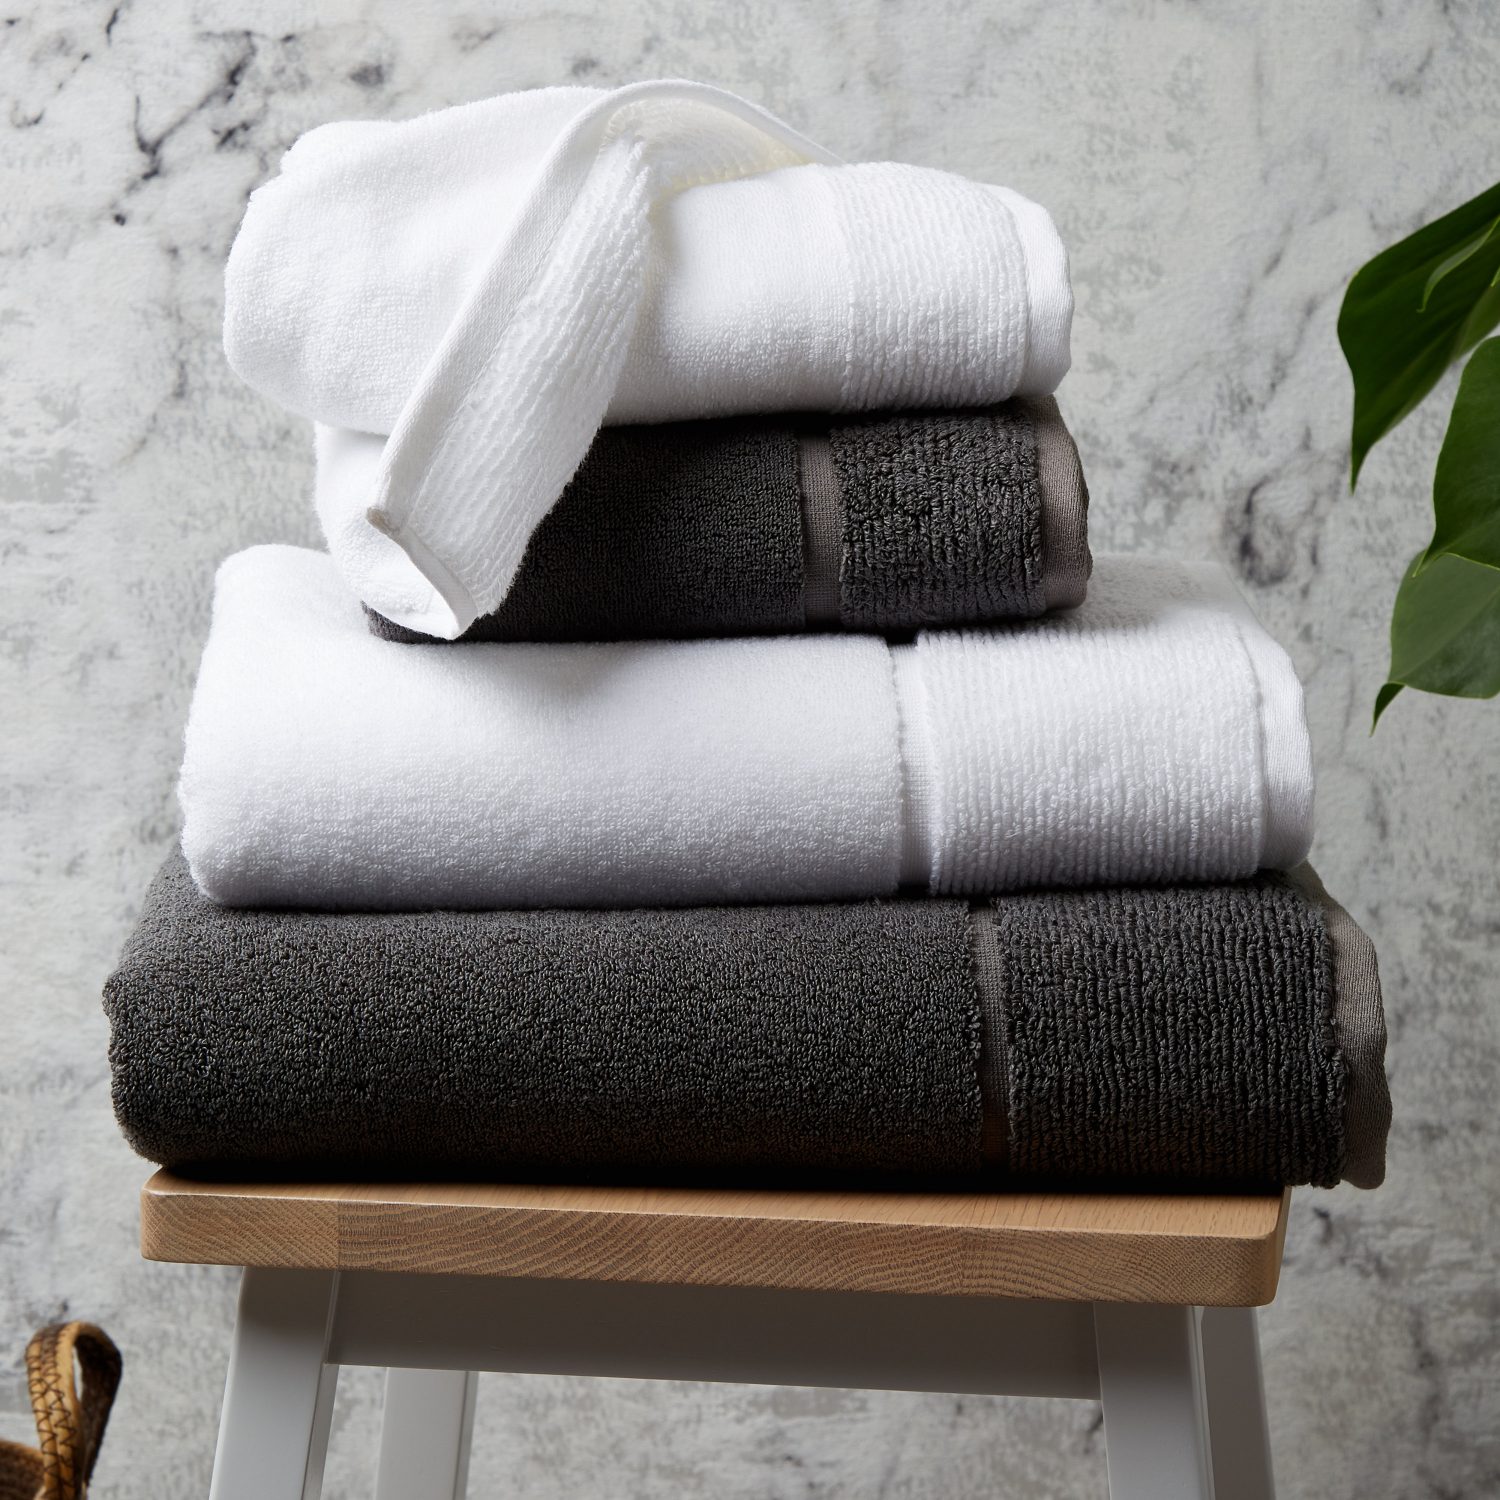 Panda London Bamboo Towels Folded Pure White and Urban Grey